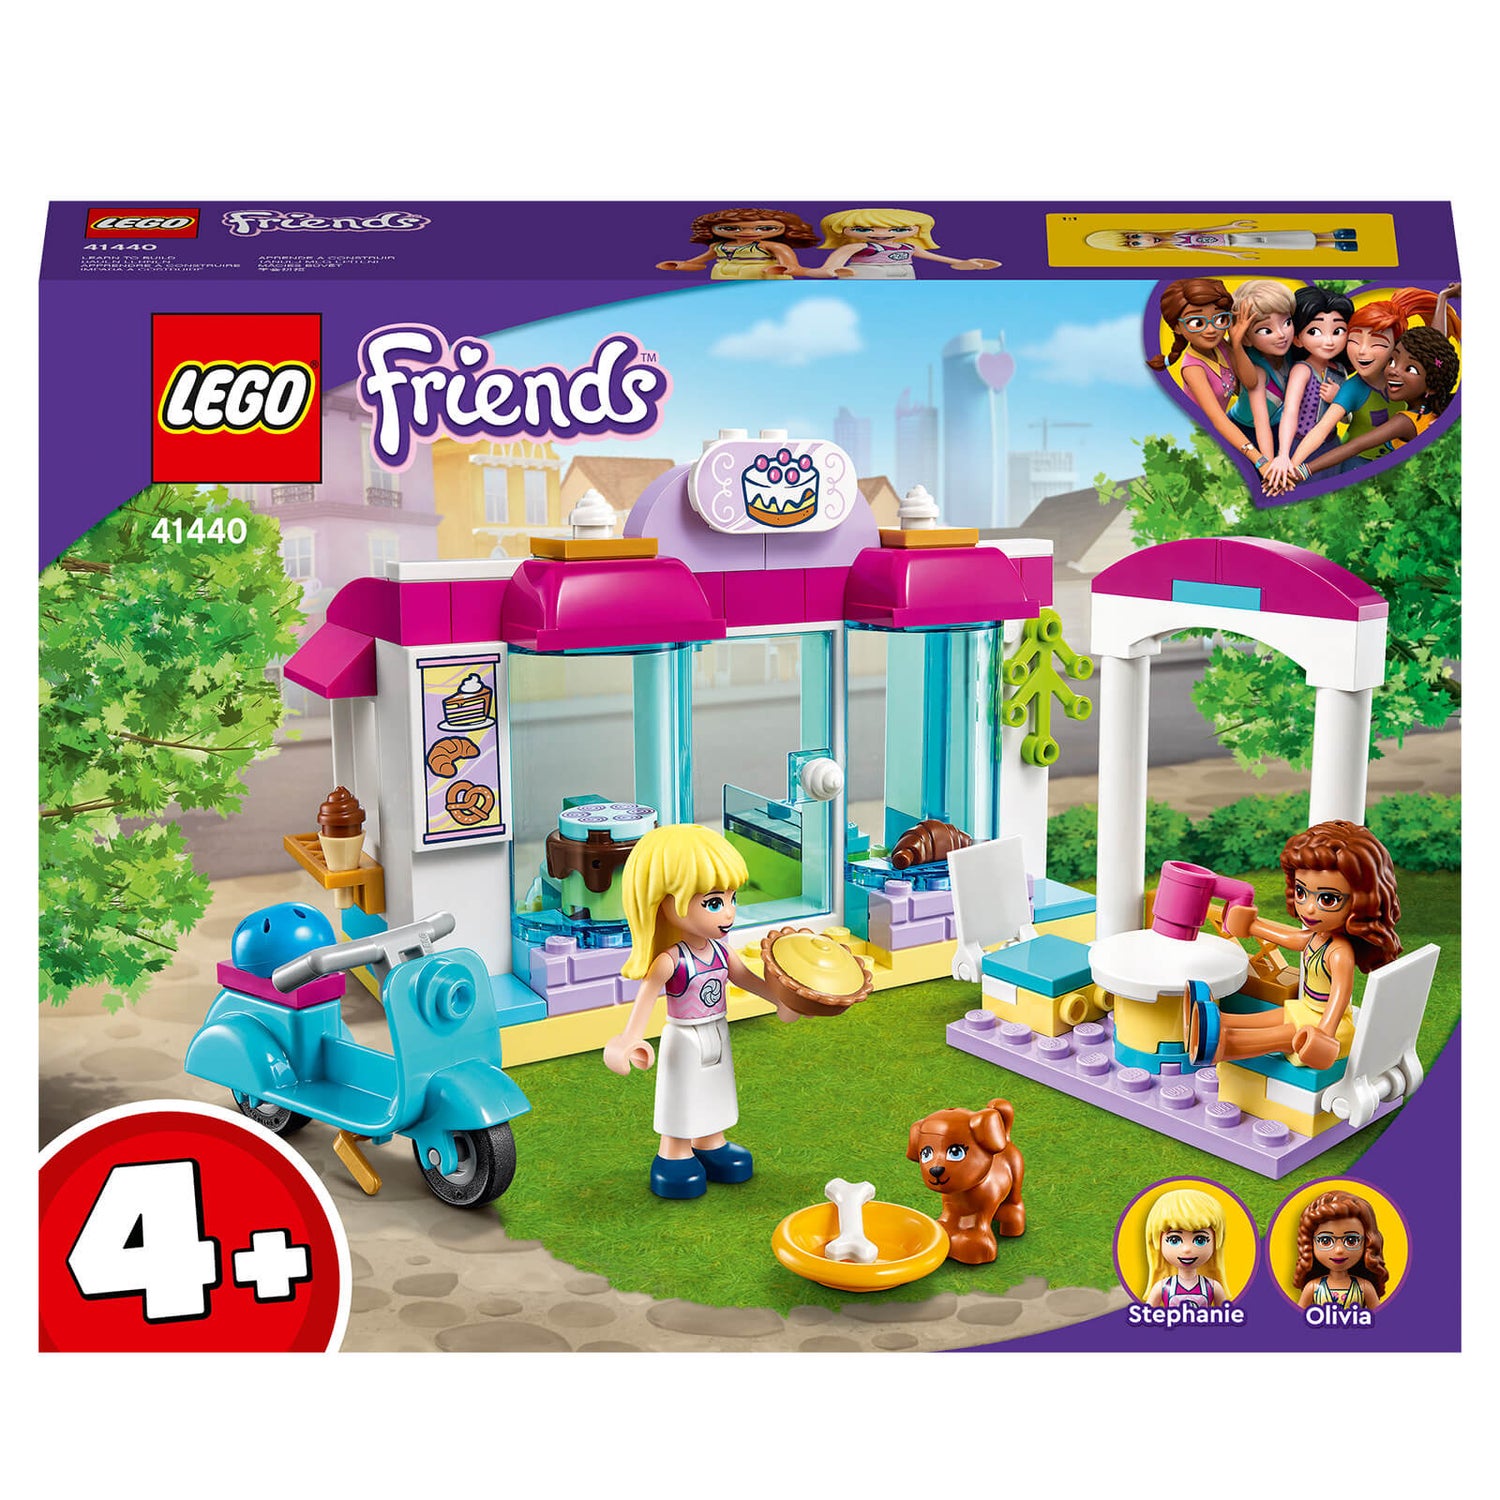 LEGO Friends: Heartlake City Bakery Playset (41440)